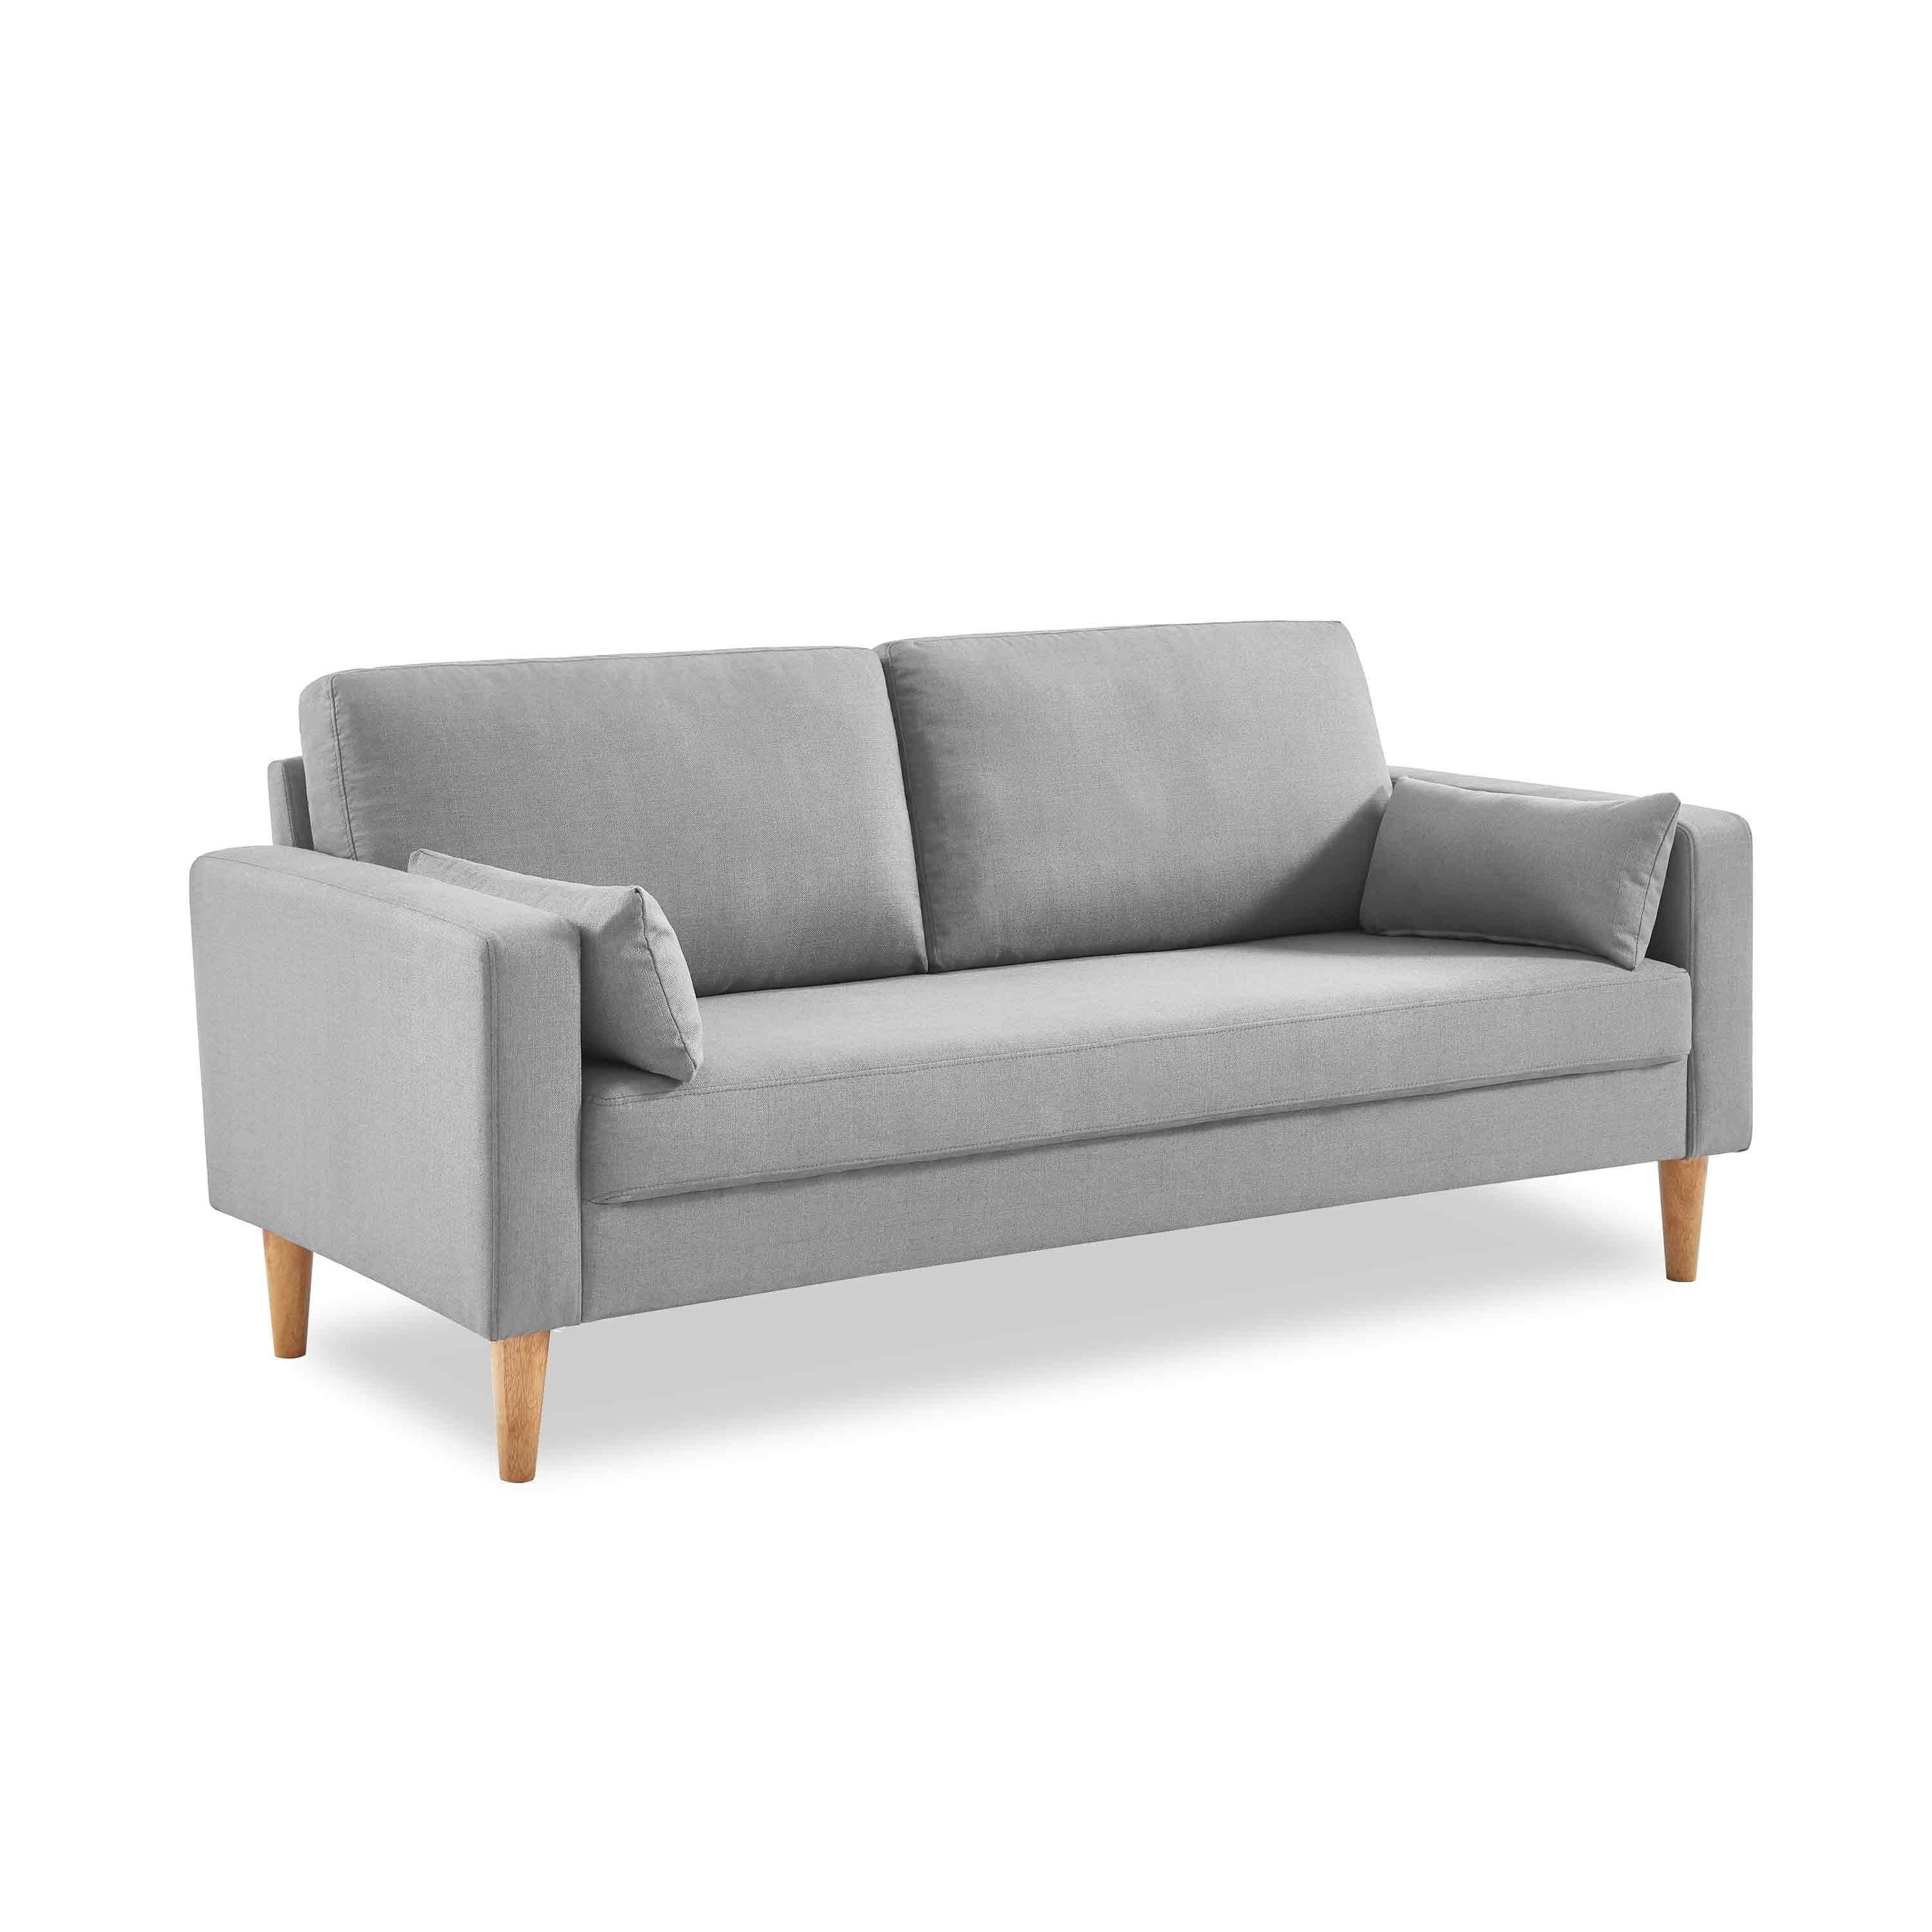 Large 3-seater sofa Scandi-style with wooden legs - Bjorn - Light Grey,sweeek,Photo2